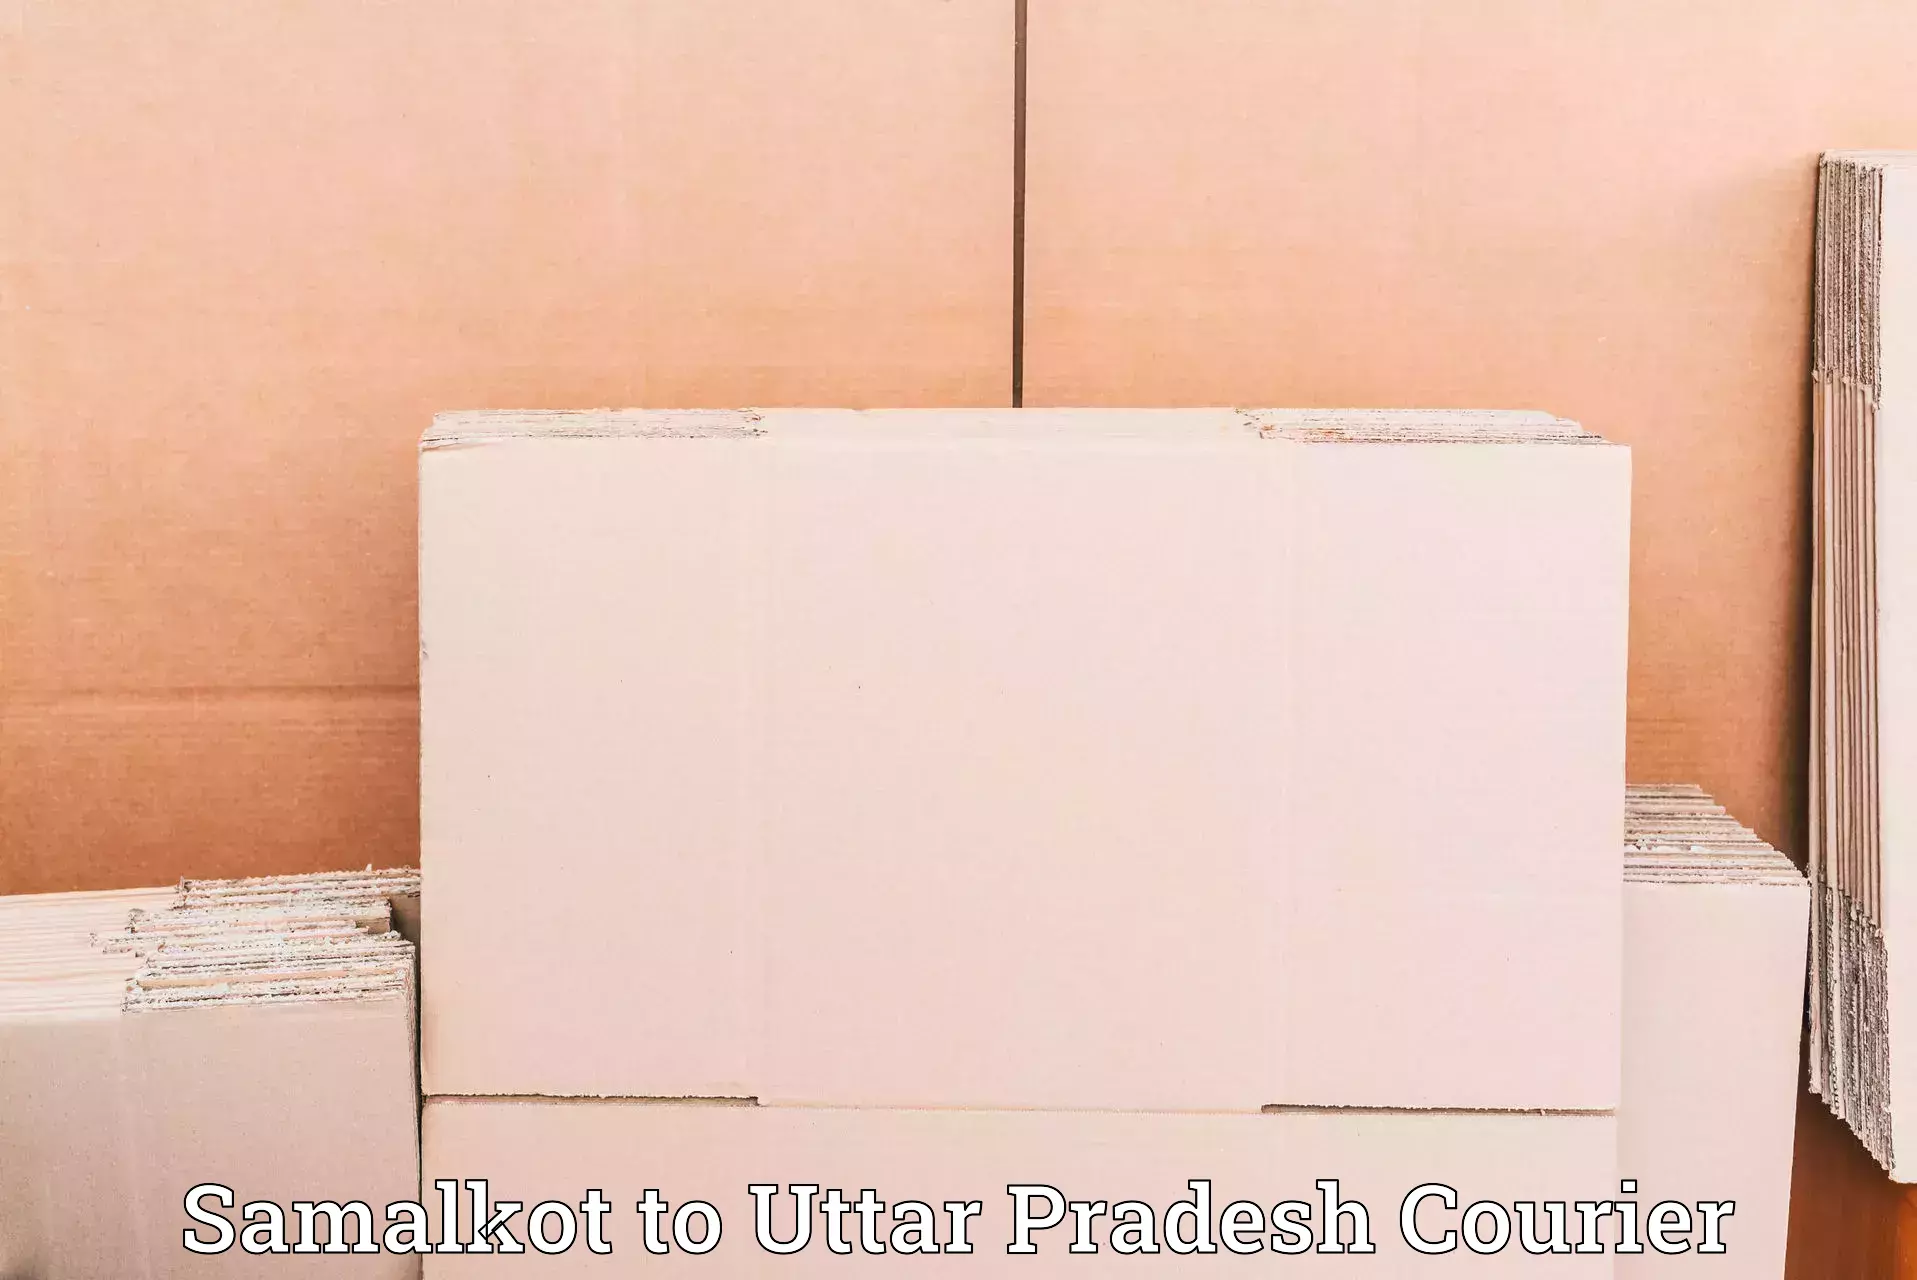 Enhanced tracking features Samalkot to Uttar Pradesh